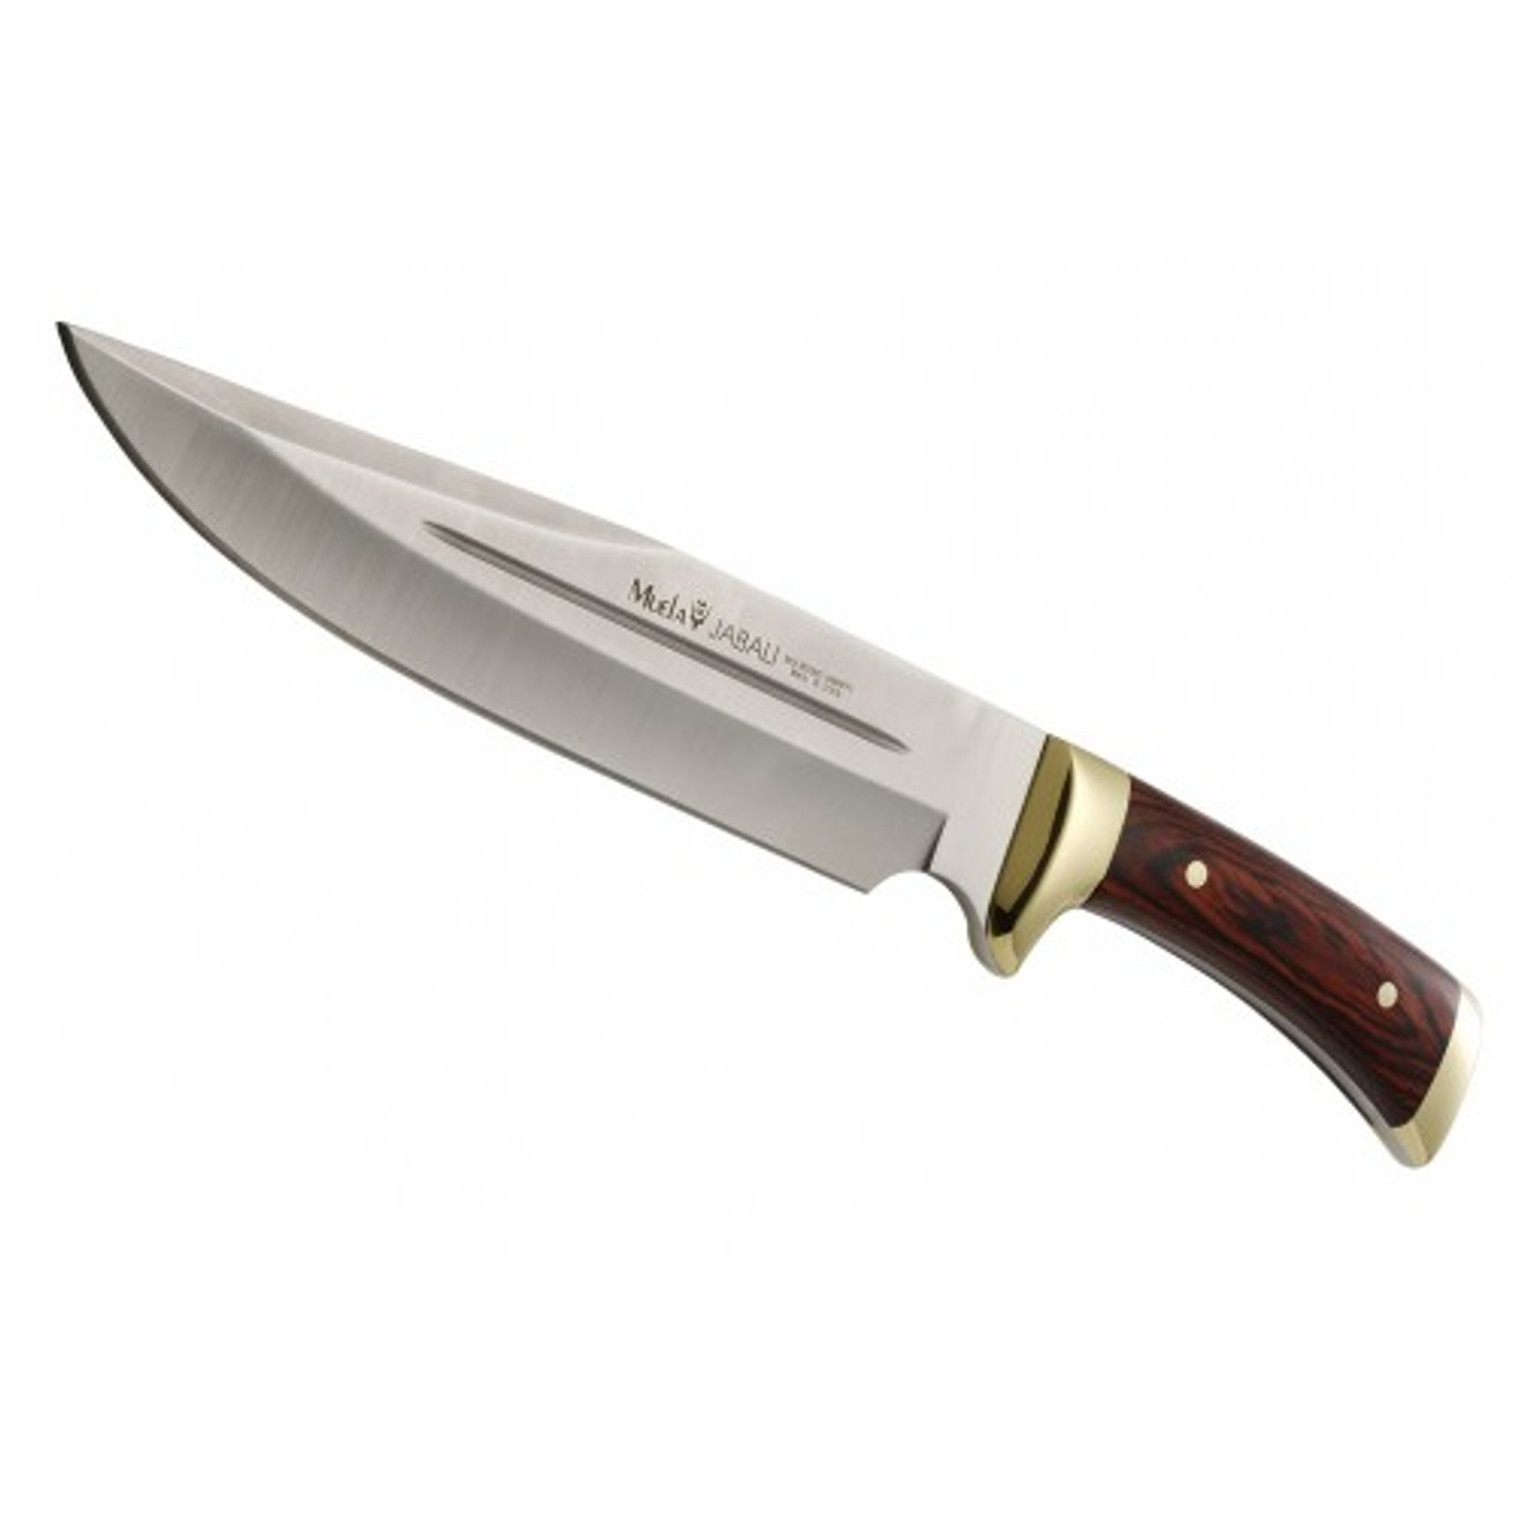 MUELA JABALI-21R, X50CrMoV15, 8-3/8" Fixed Blade Hunting Knife, Coral Pakkawood Handle